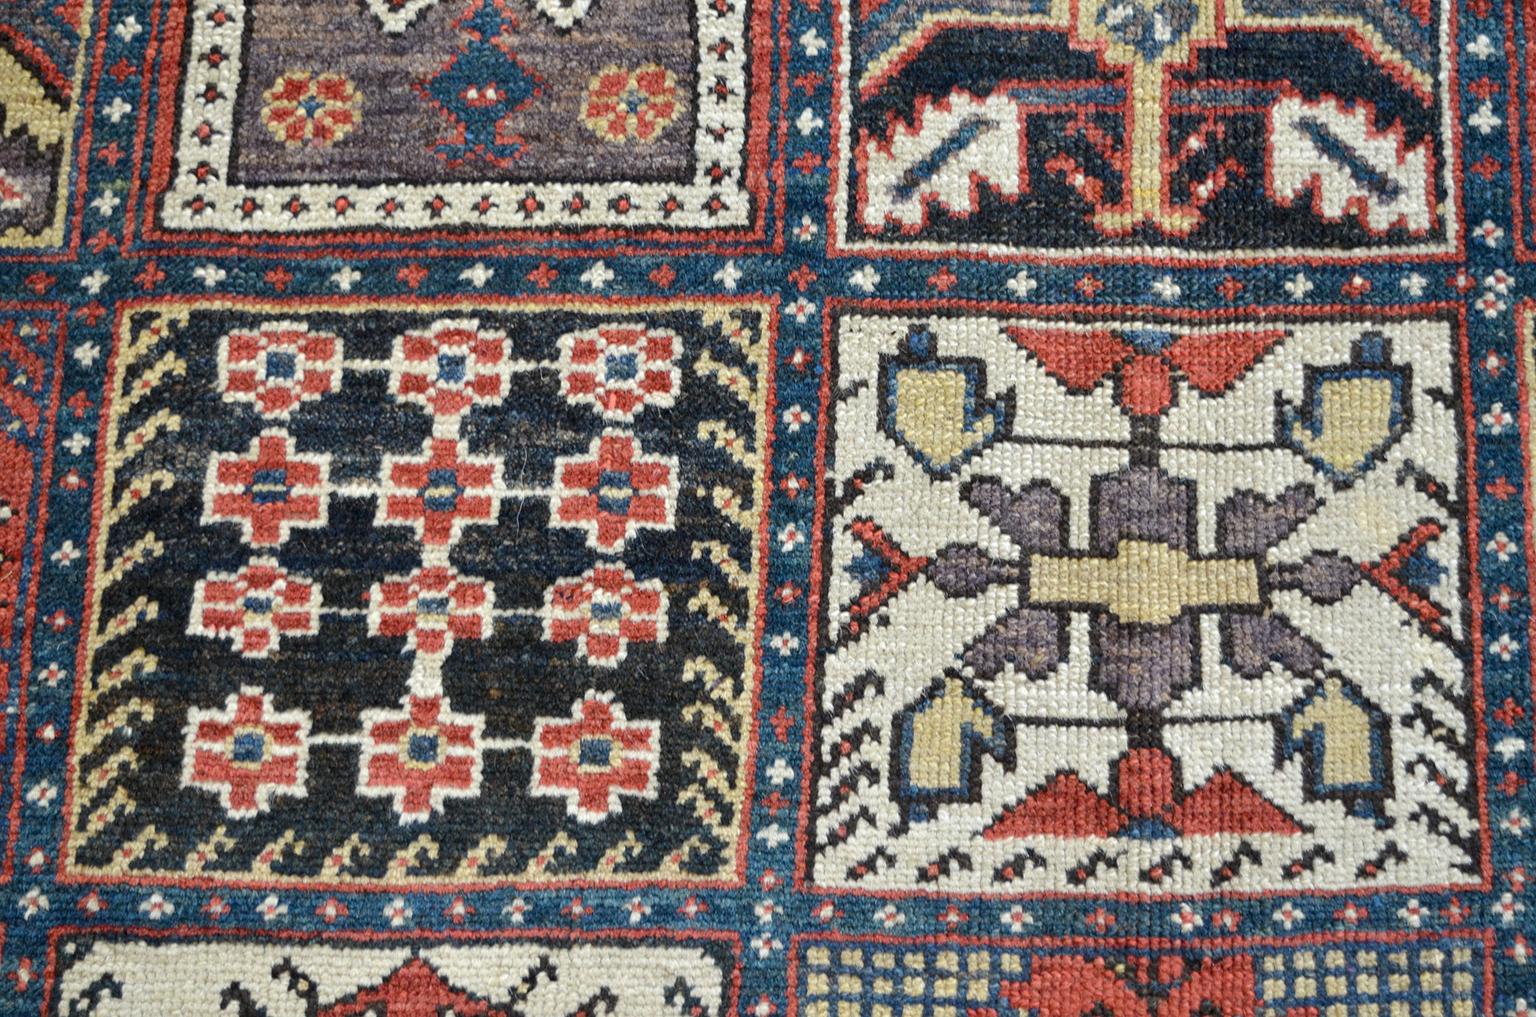 Antique 1900s Wool Persian Bakhtiari Rug by Olad, Garden Motif, 7' x 13' For Sale 1